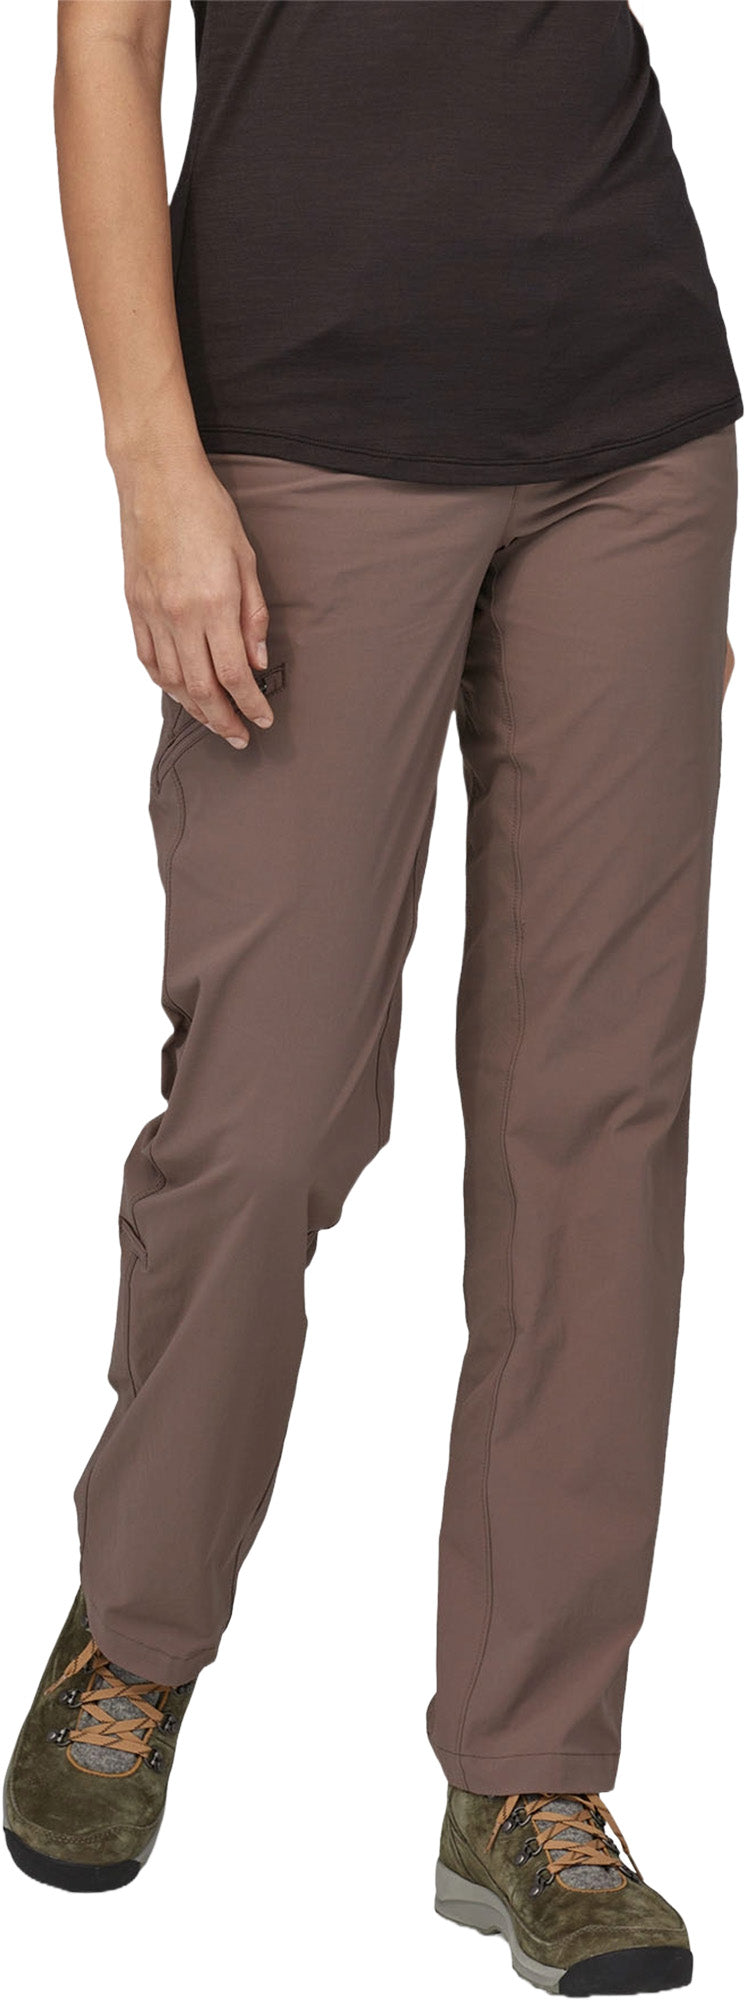 Patagonia Quandary Pants - Regular, Pants & Shorts